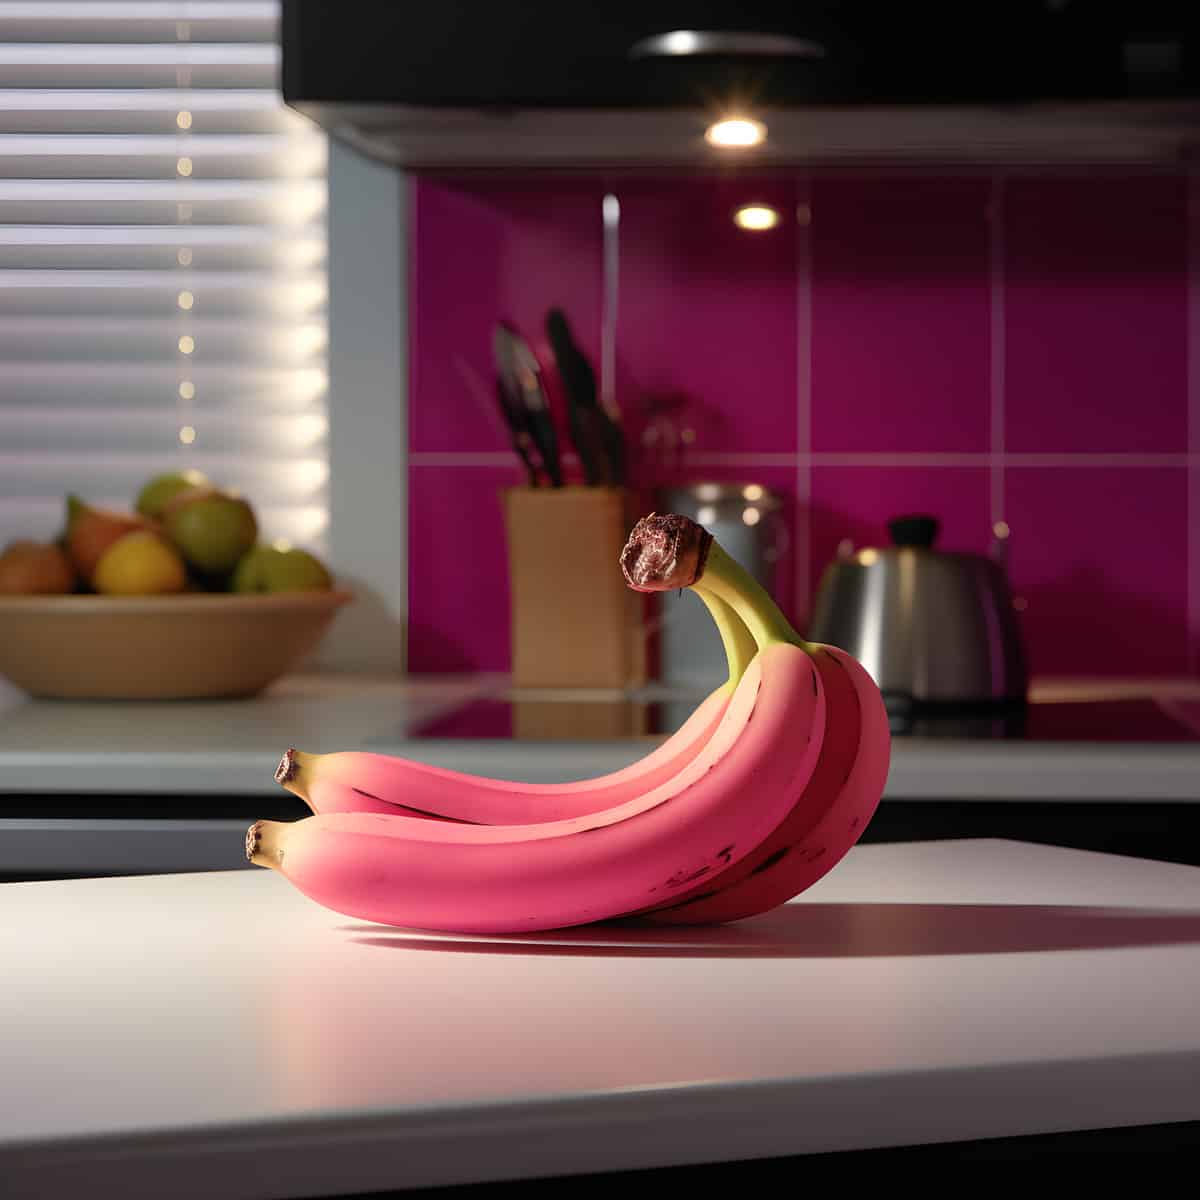 Pink Banana on a kitchen counter